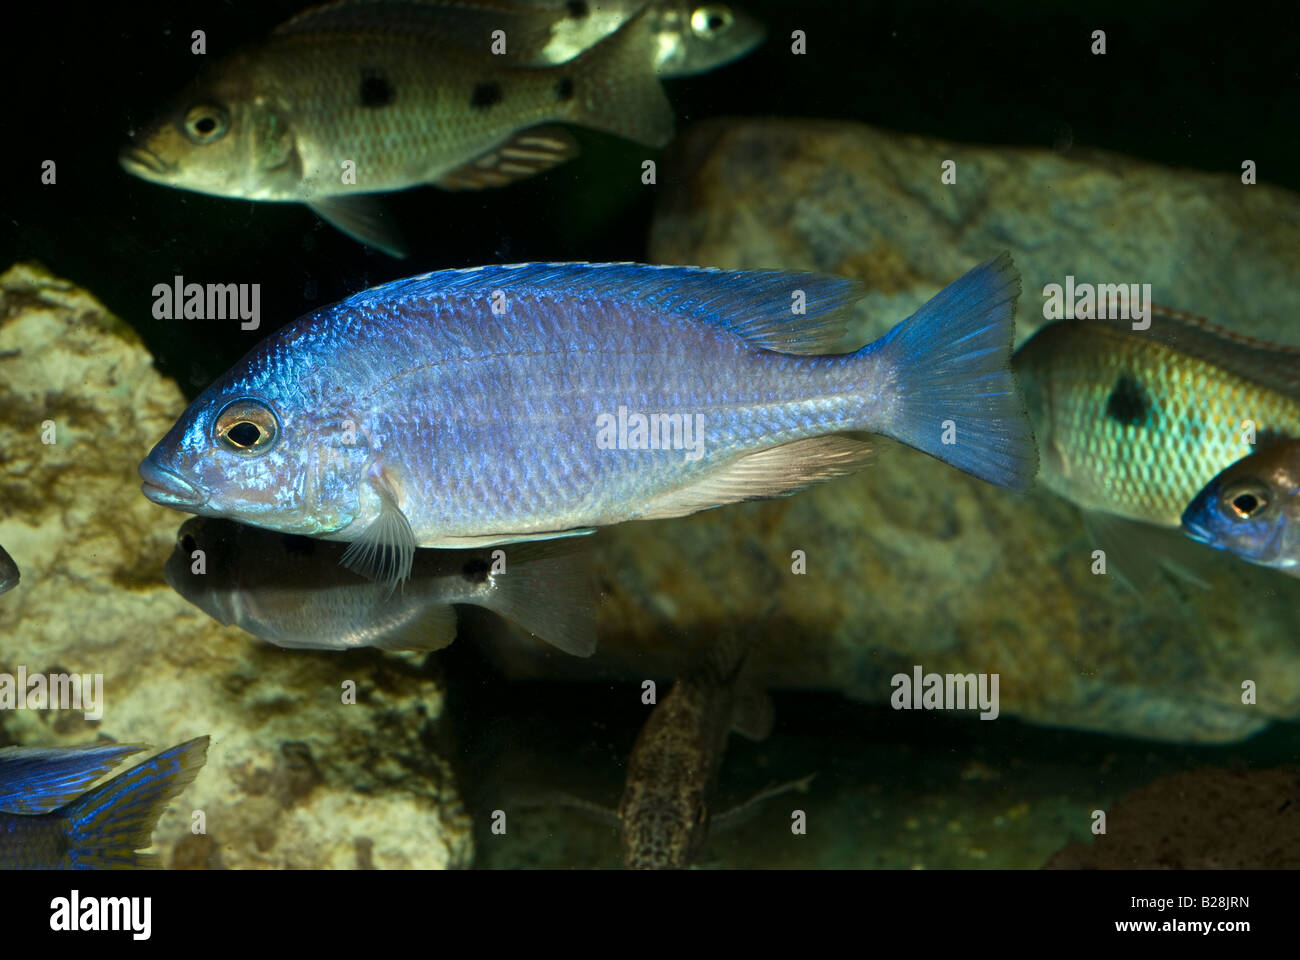 Placidochromis sp. Mdka White Lips, Malawi Lake Cichlid, Africa Stock Photo